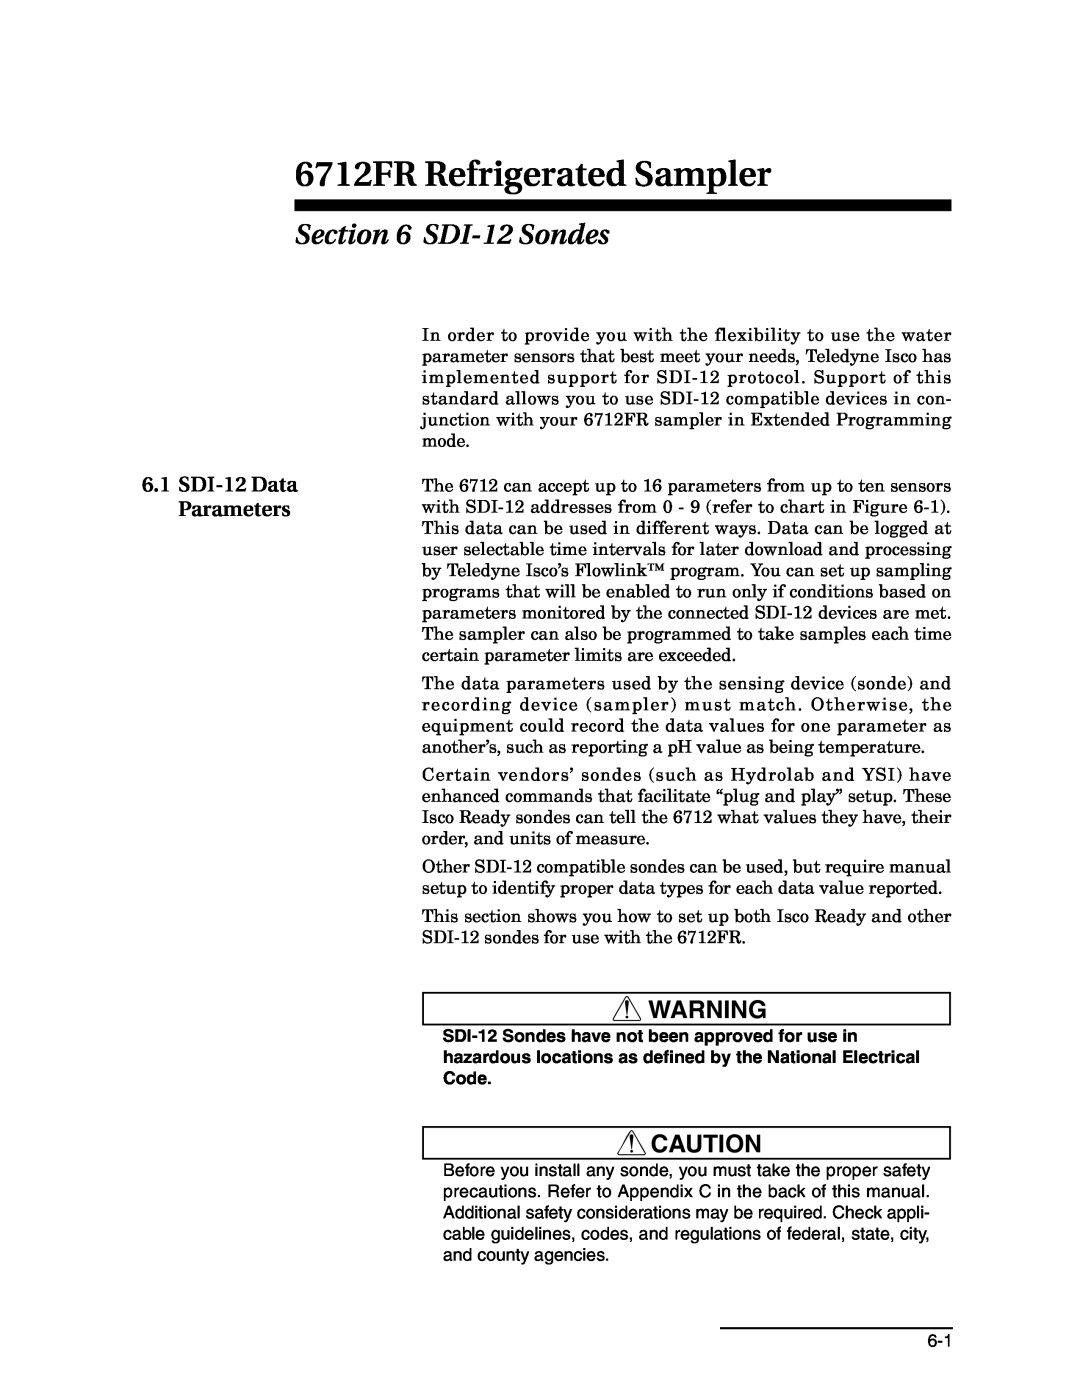 Teledyne manual SDI-12 Sondes, SDI-12 Data Parameters, 6712FR Refrigerated Sampler 